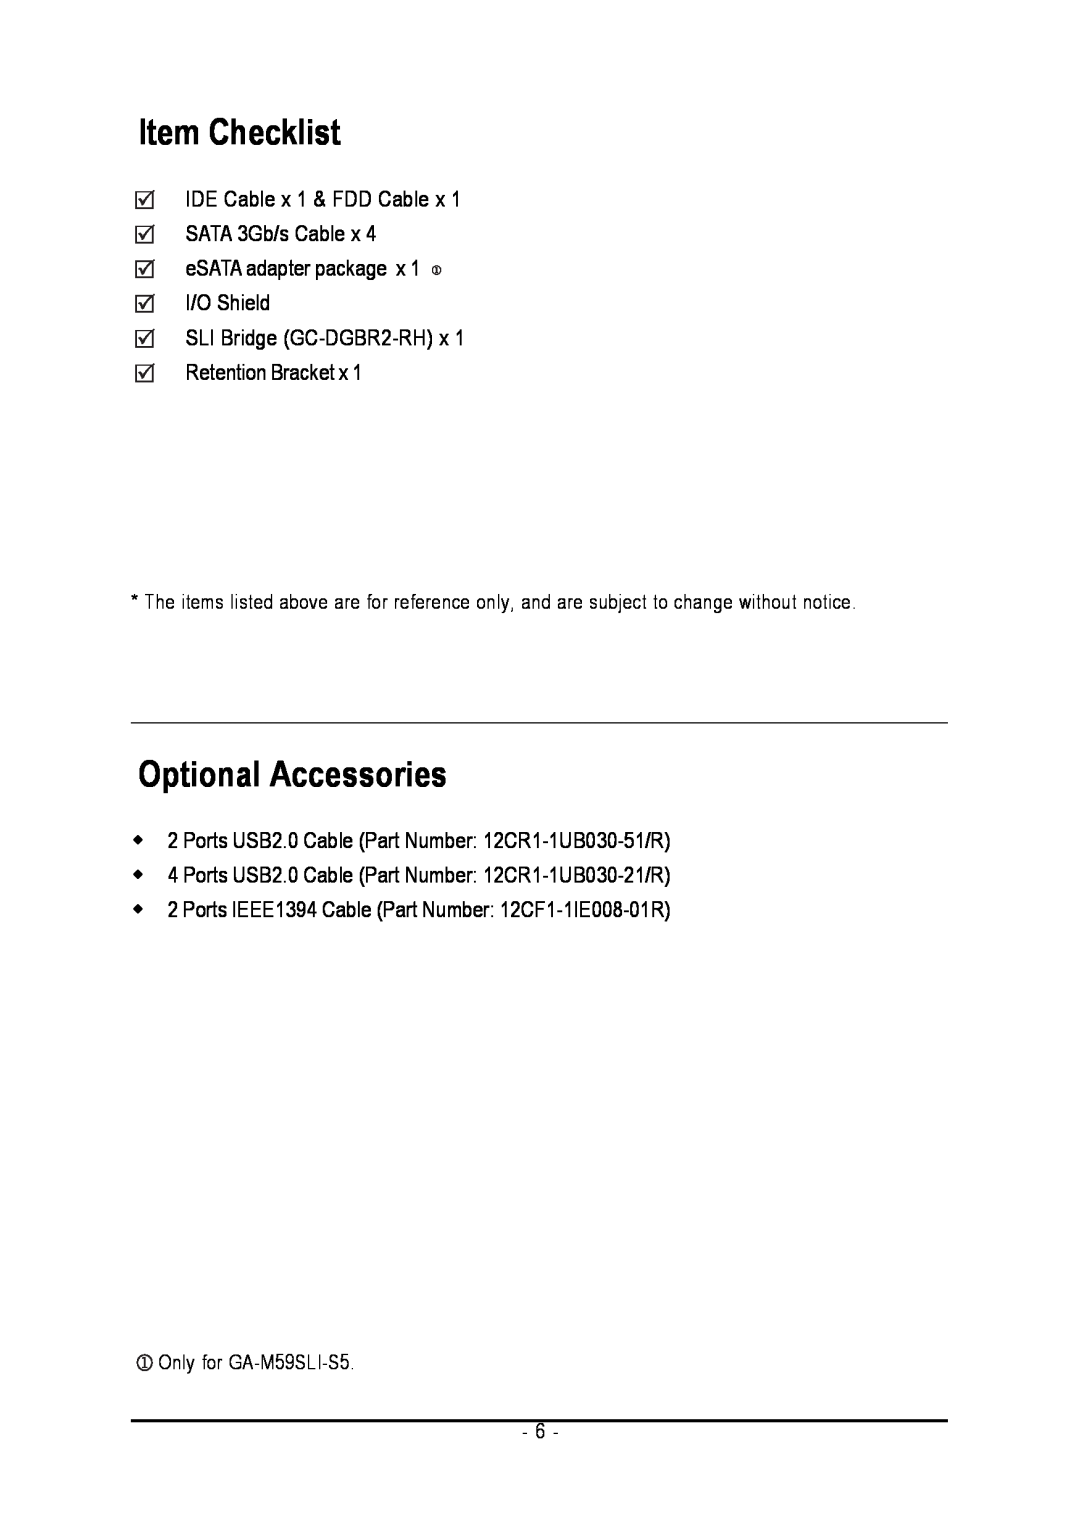 Gigabyte GA-M59SLI-S5, GA-M59SLI-S4 user manual Item Checklist, Optional Accessories, eSATA adapter package x 1 I/O Shield 